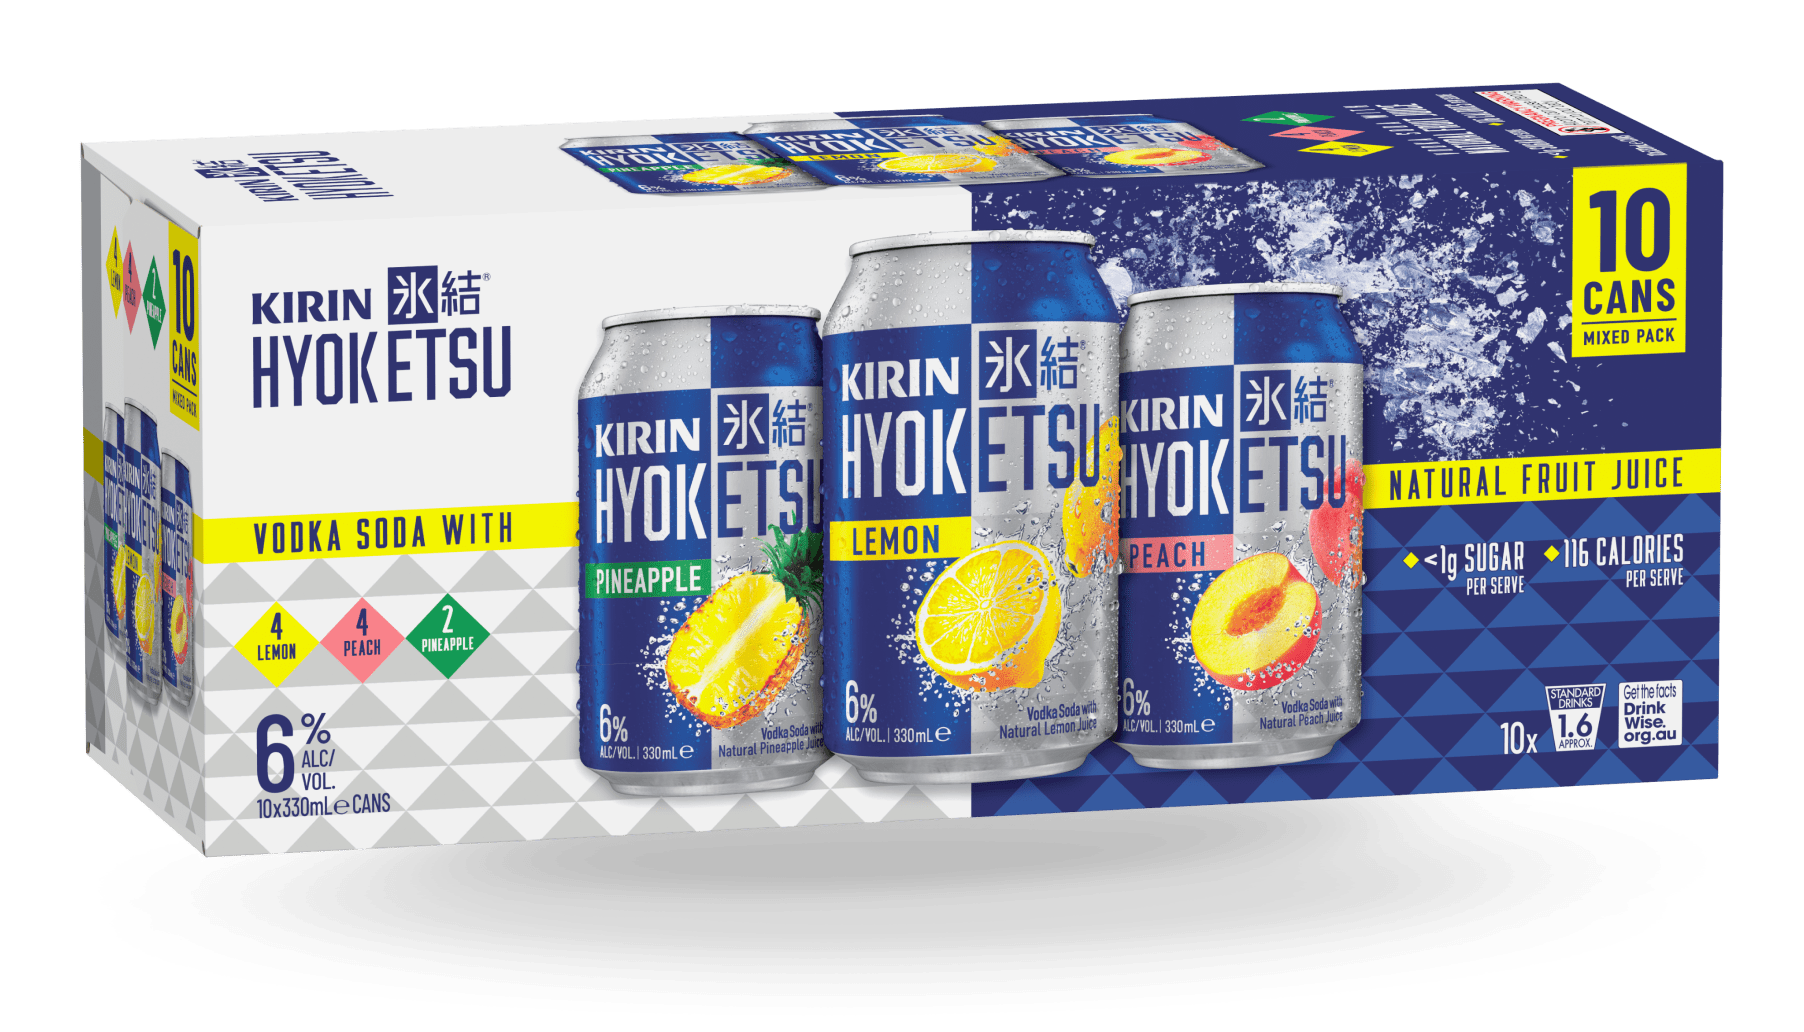 A mixed pack of Kirin Hyoketsu cans